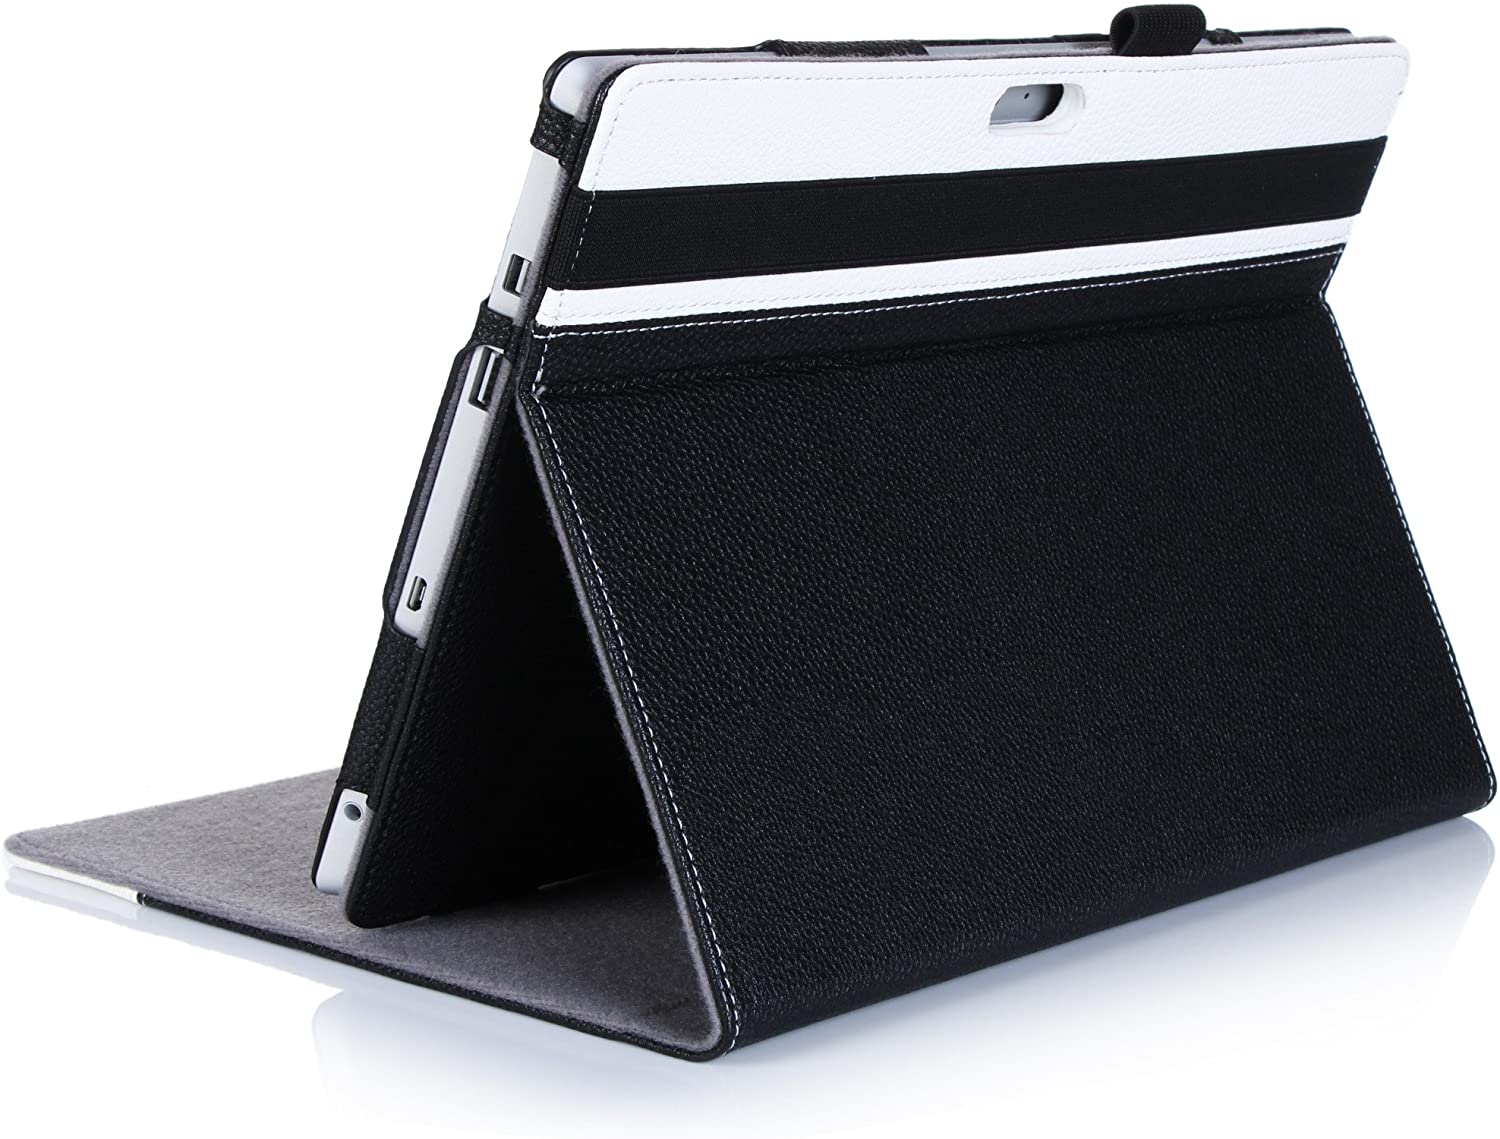 Surface 3 10.8 2015 Folio Case